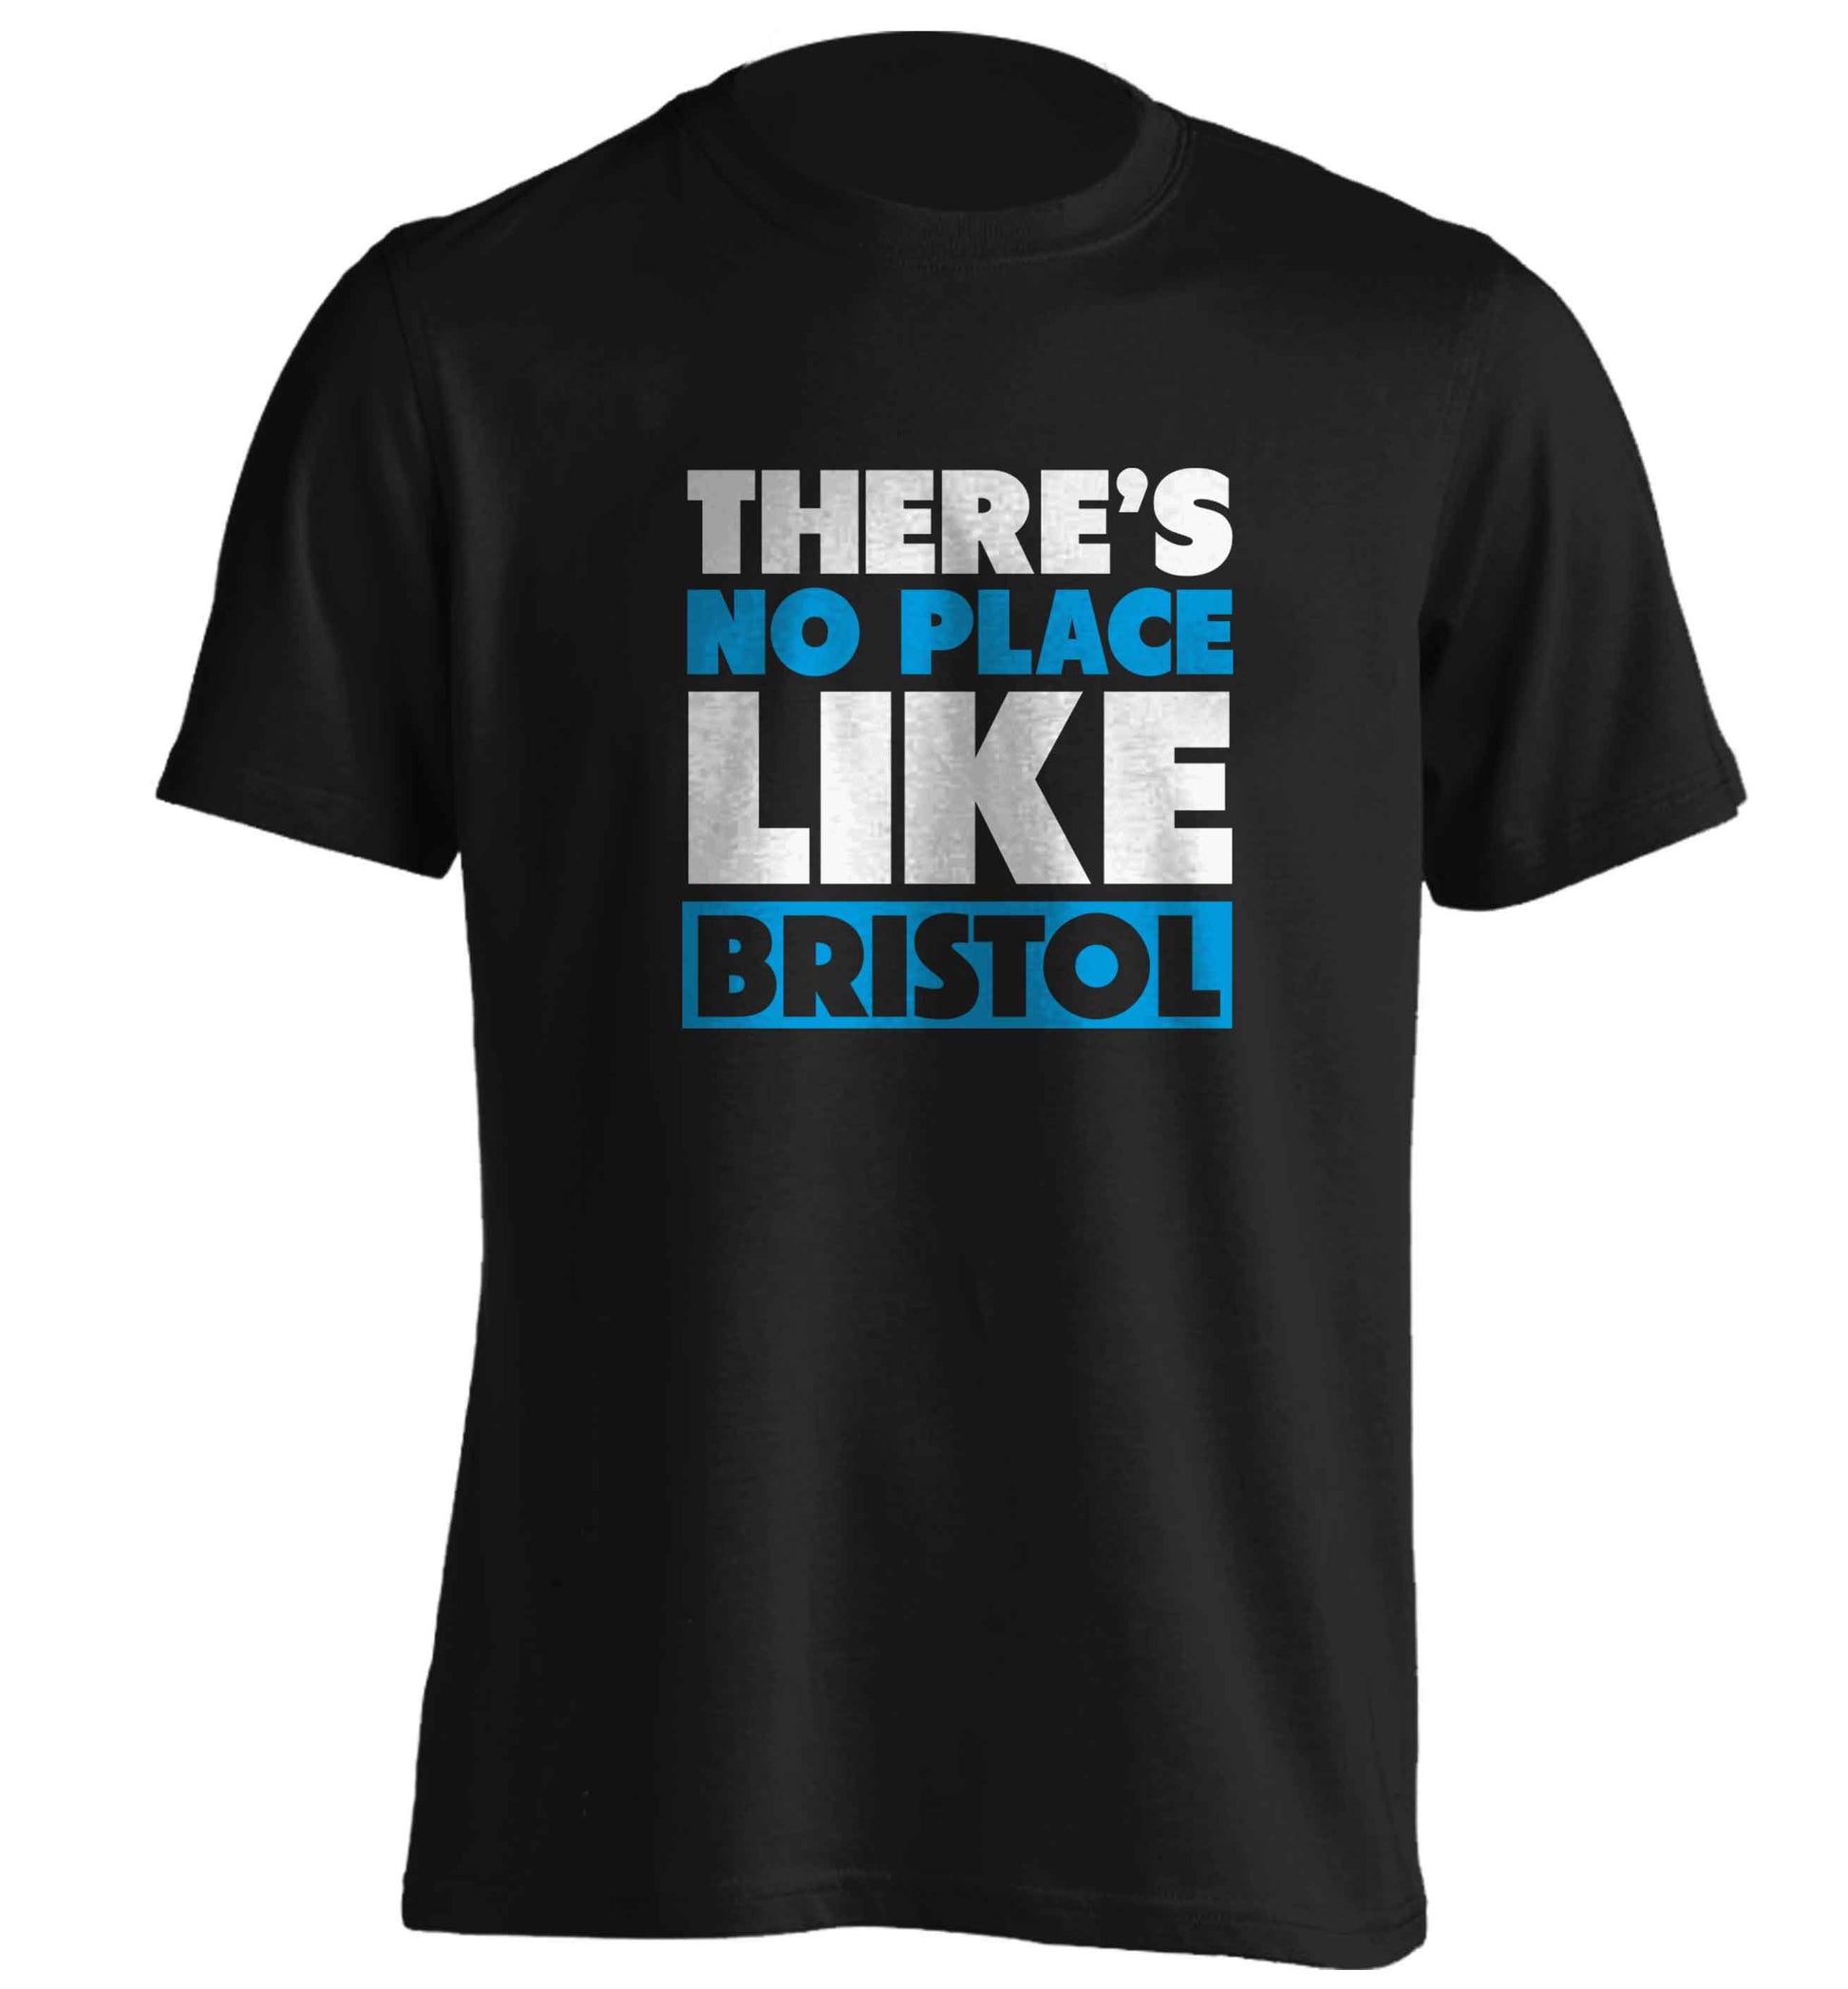 There's no place like Bristol adults unisex black Tshirt 2XL